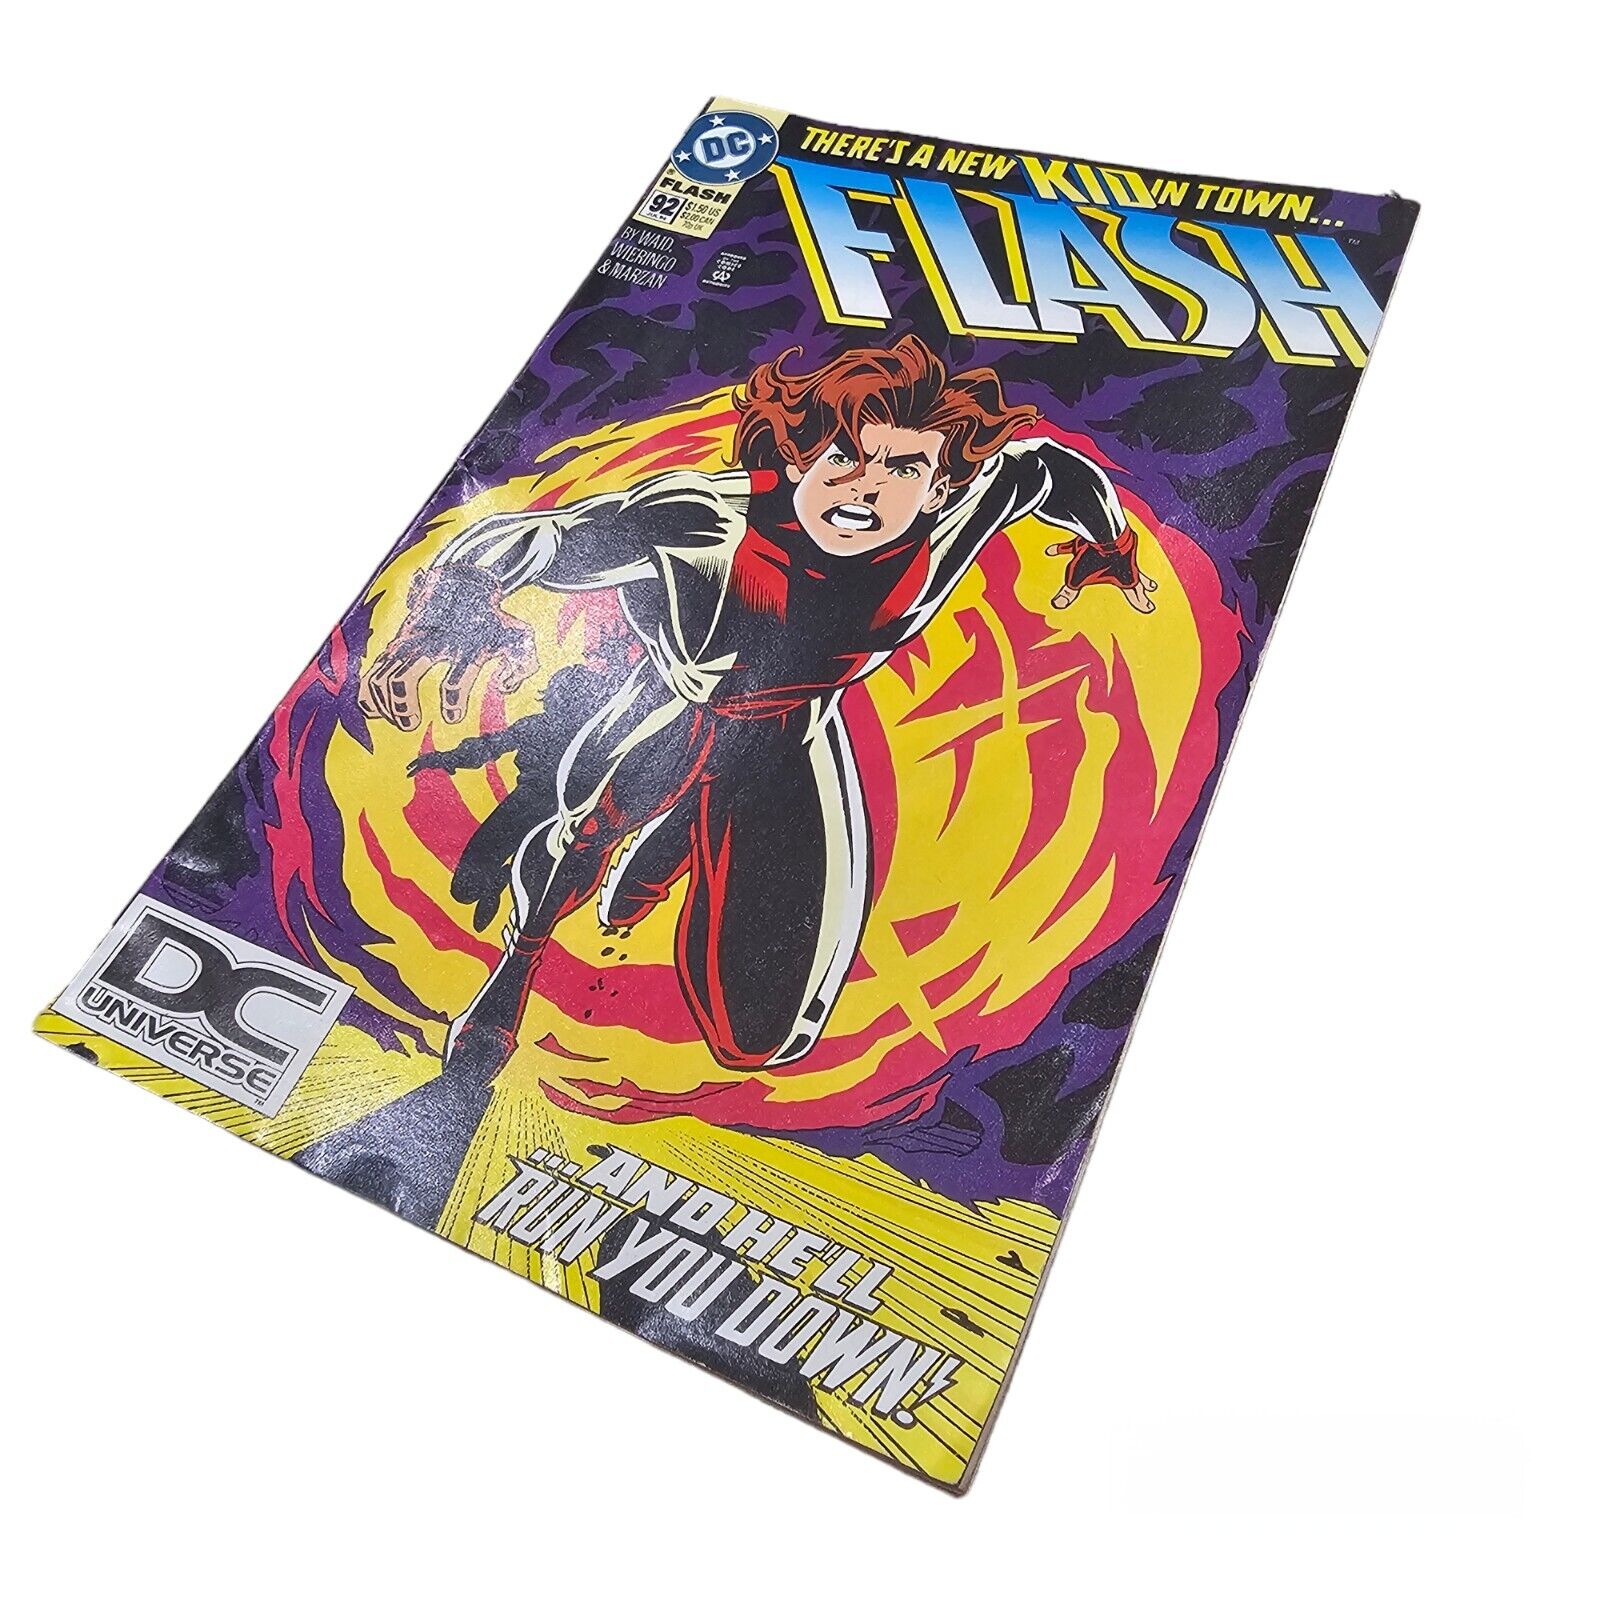 DC Flash #92 (Jul ‘94)